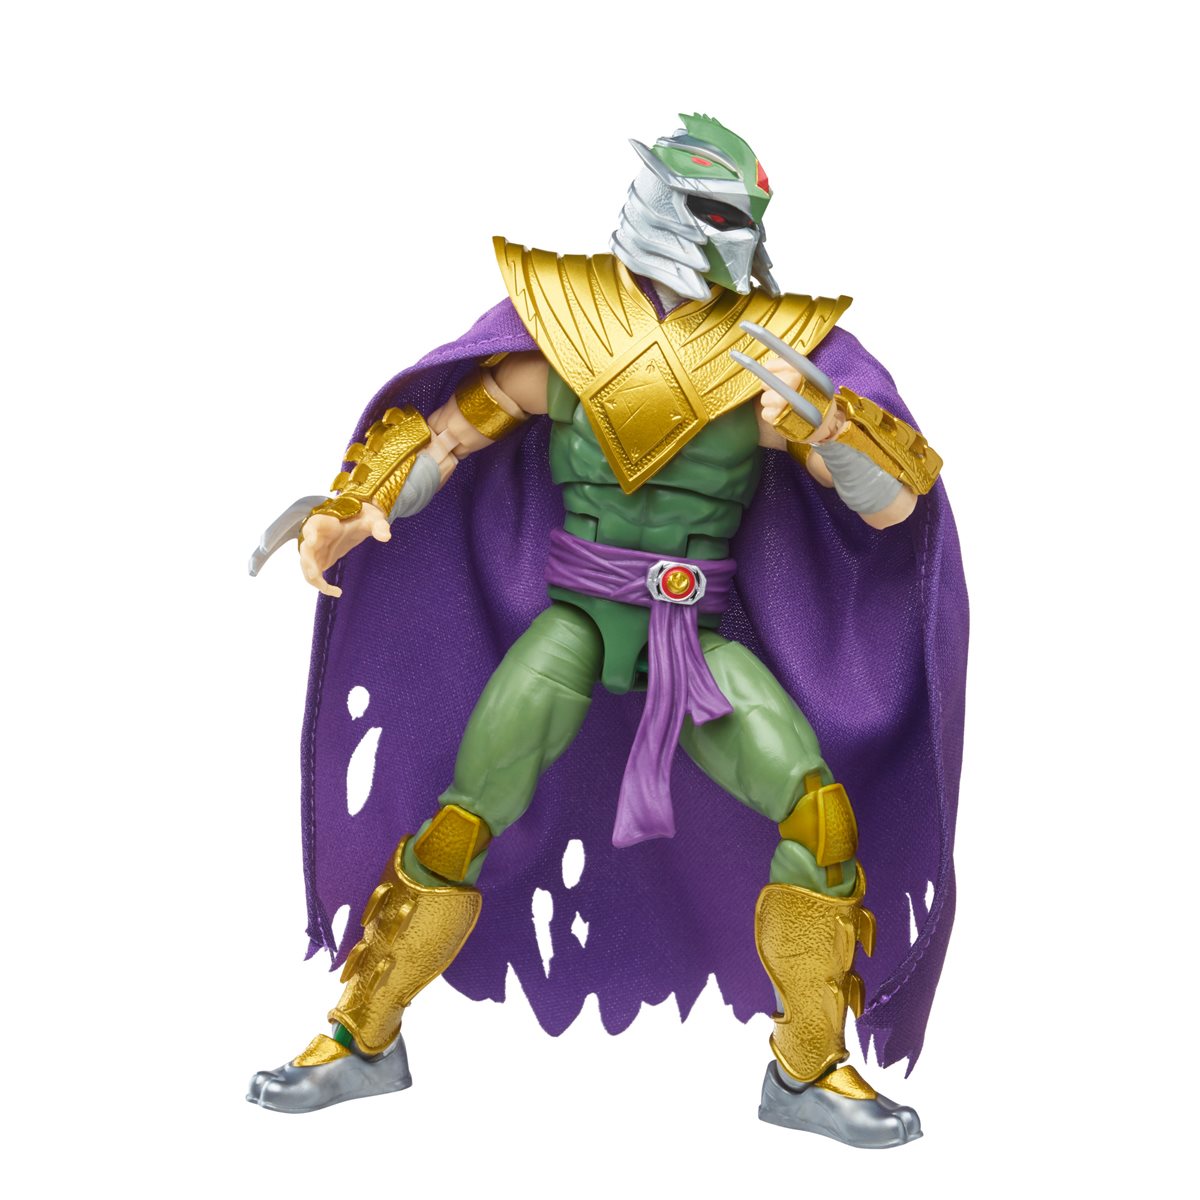 Power Rangers X Teenage Mutant Ninja Turtles: Lightning Collection Morphed Shredder Green Ranger Action Figure